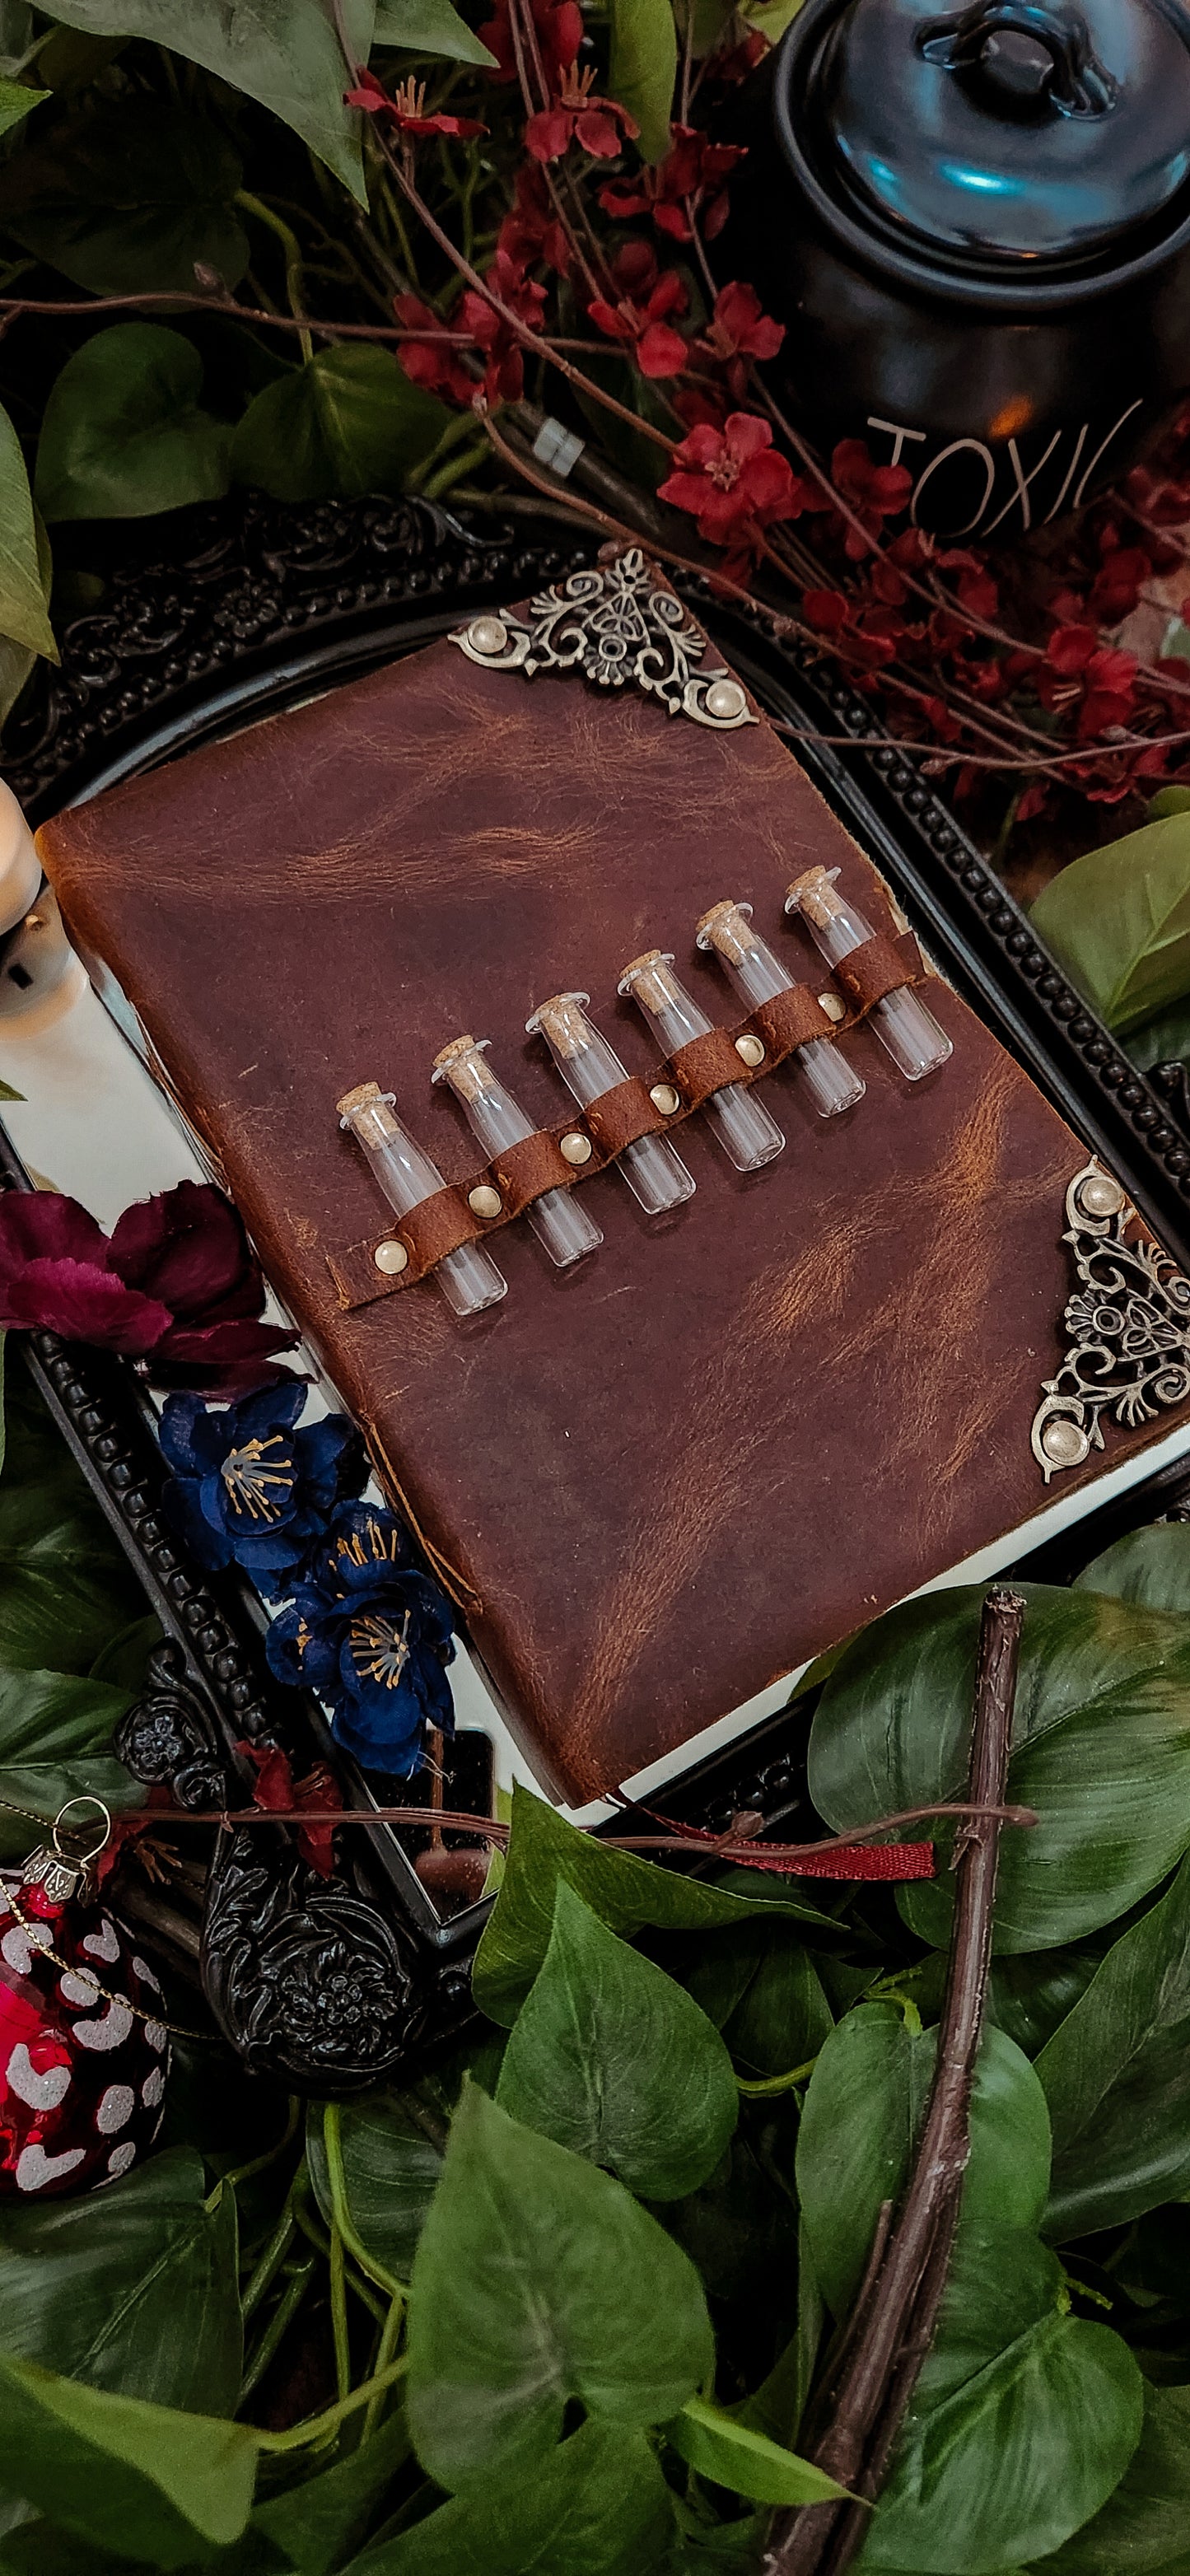 Potion Book leather journal & sketchbook